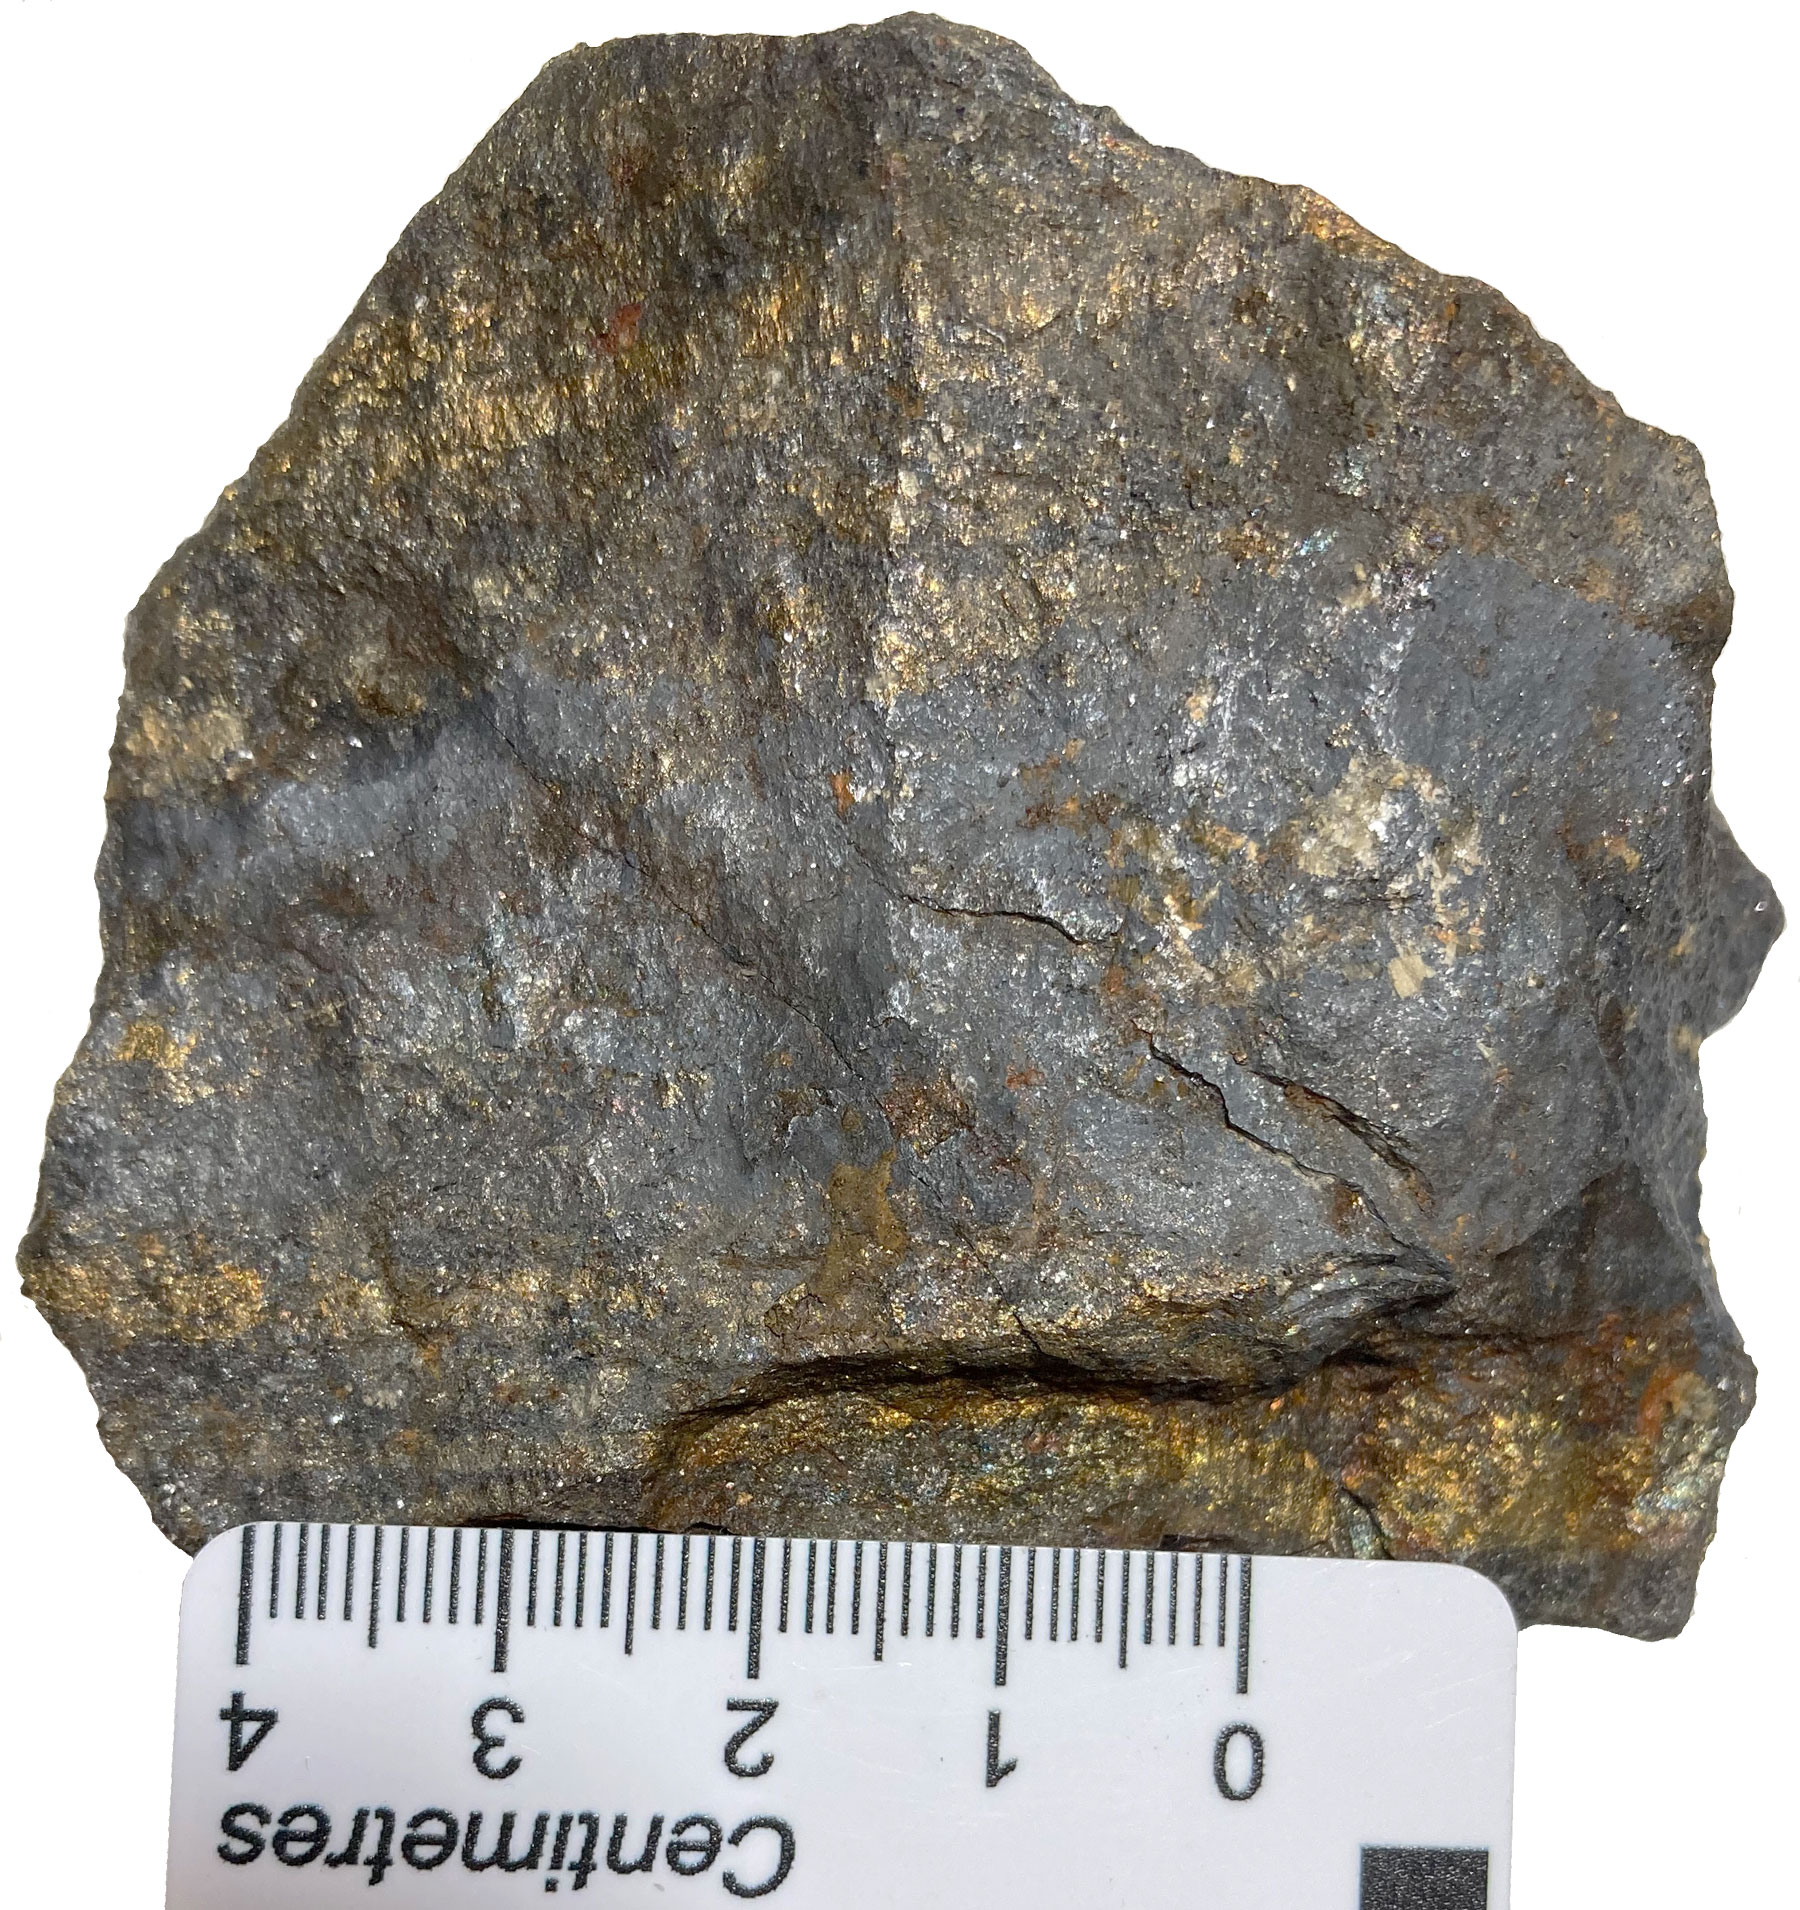 Kidd Creek massive, banded chalcopyrite-sphalerite sulphides at the base of the massive sulphide lens